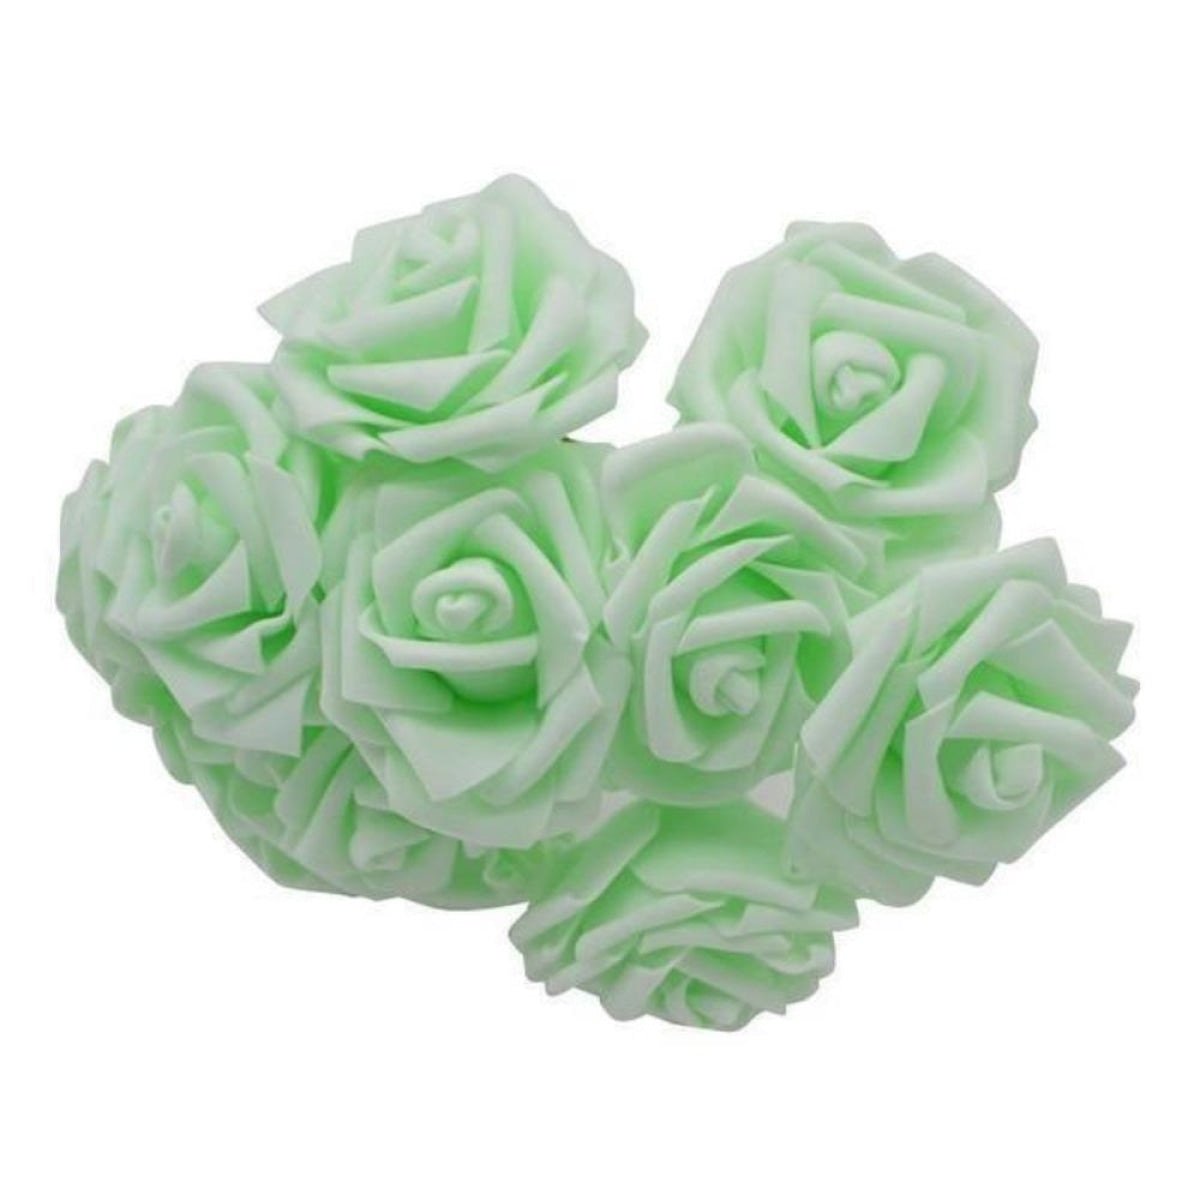 10-100pcs 8cm Artificial Flowers Foam Rose Fake Bride Bouquet Wedding - 10 - Light Green - Asia Sell